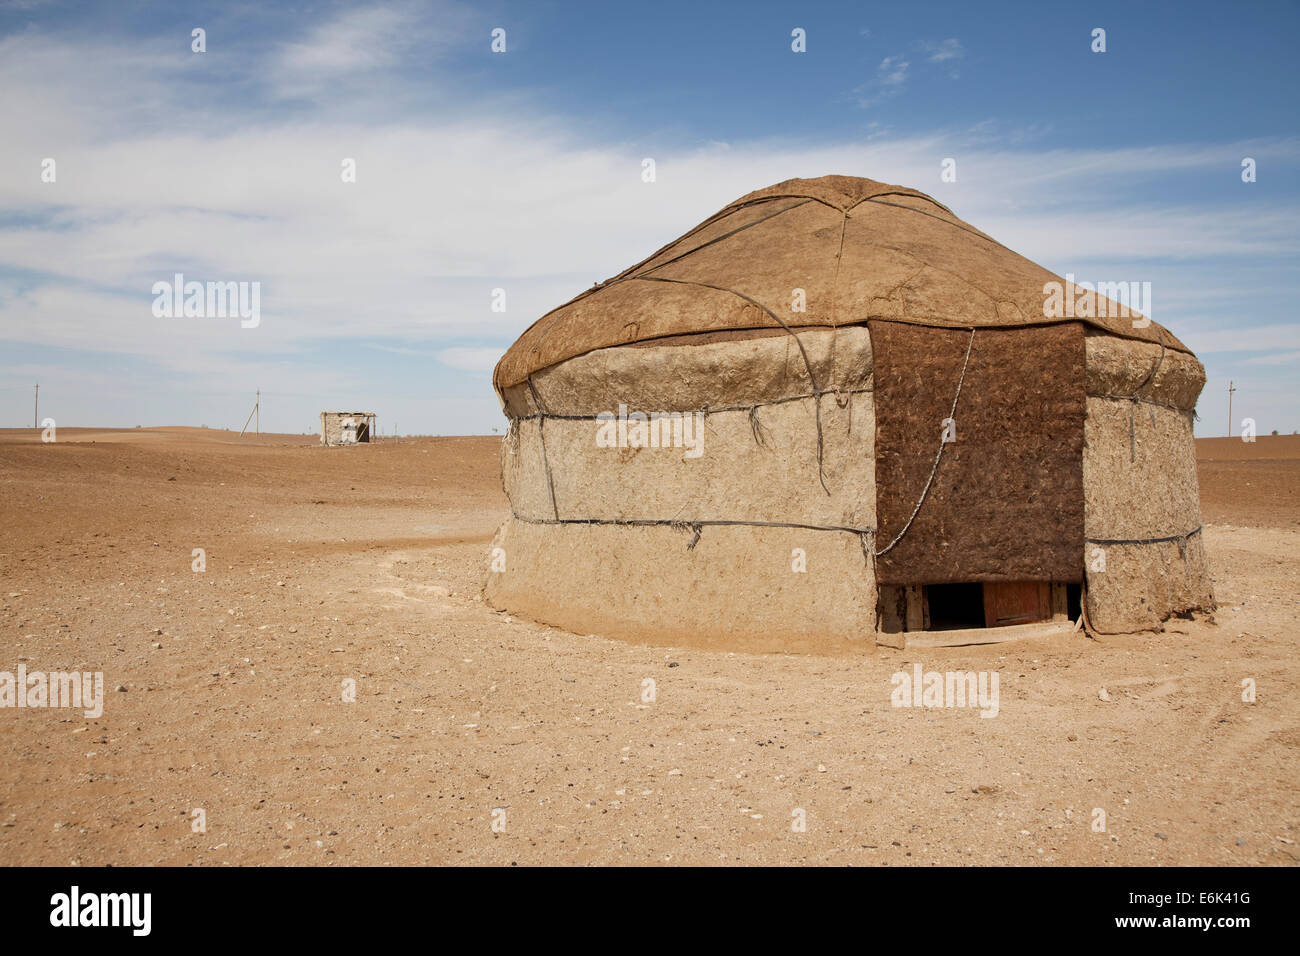 Yurt in the Kyzyl Kum or Qyzylqum desert, Silk Route, Navoi or Navoiy, Uzbekistan Stock Photo